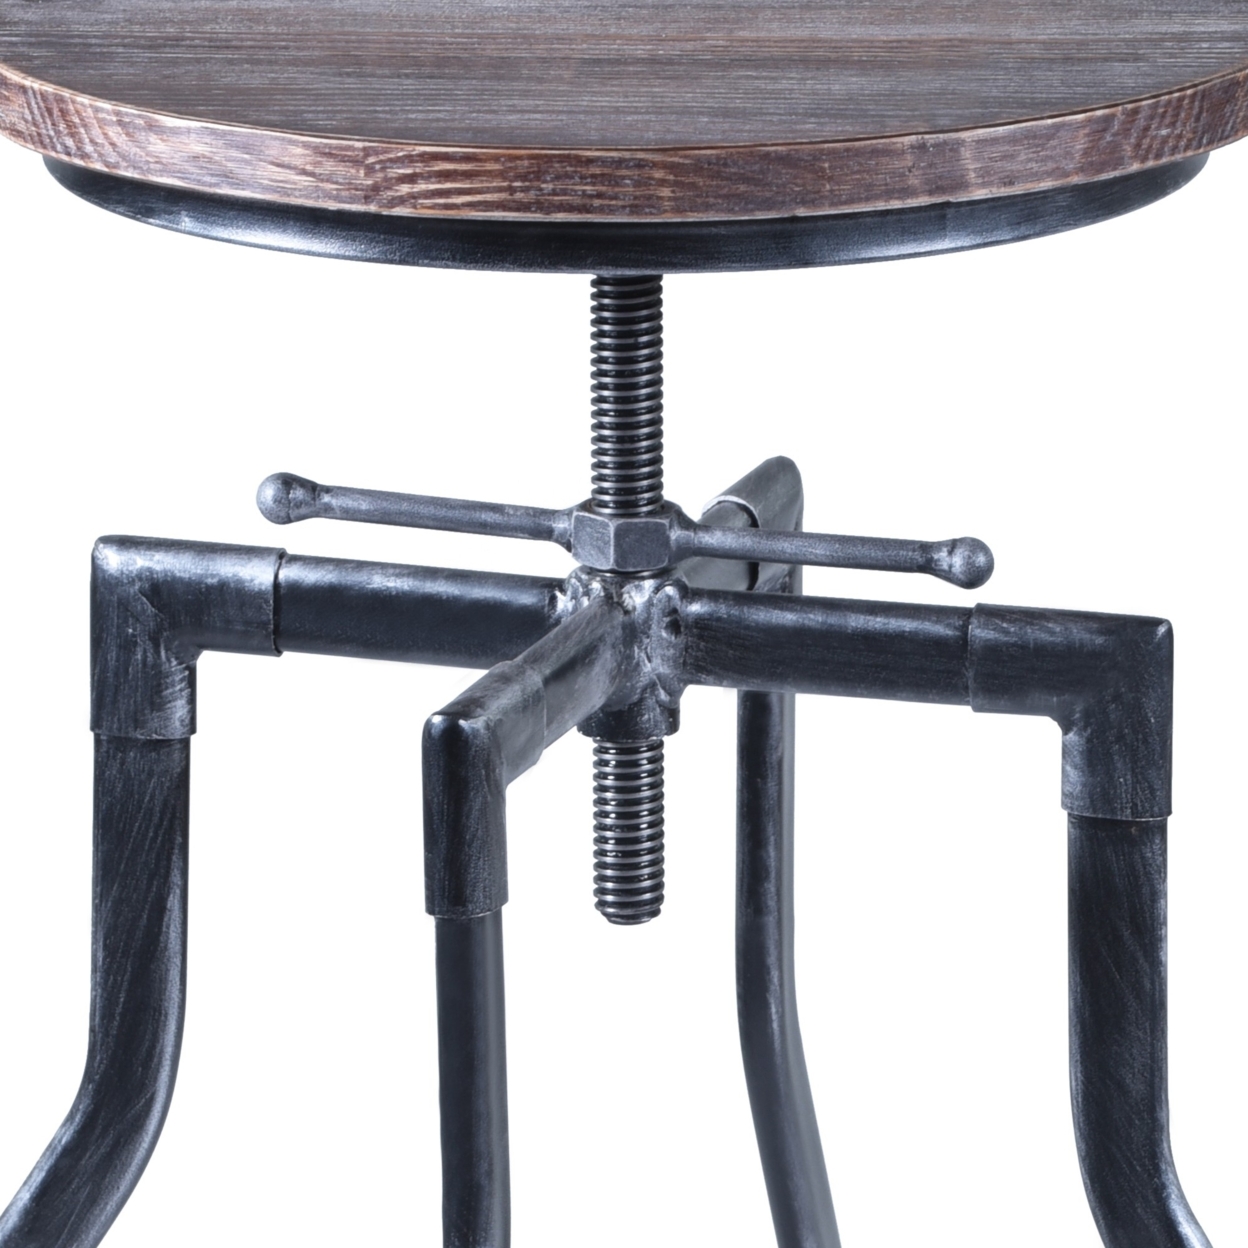 Round Wood Top Adjustable Barstool With Sculpted Metal Legs, Gray- Saltoro Sherpi